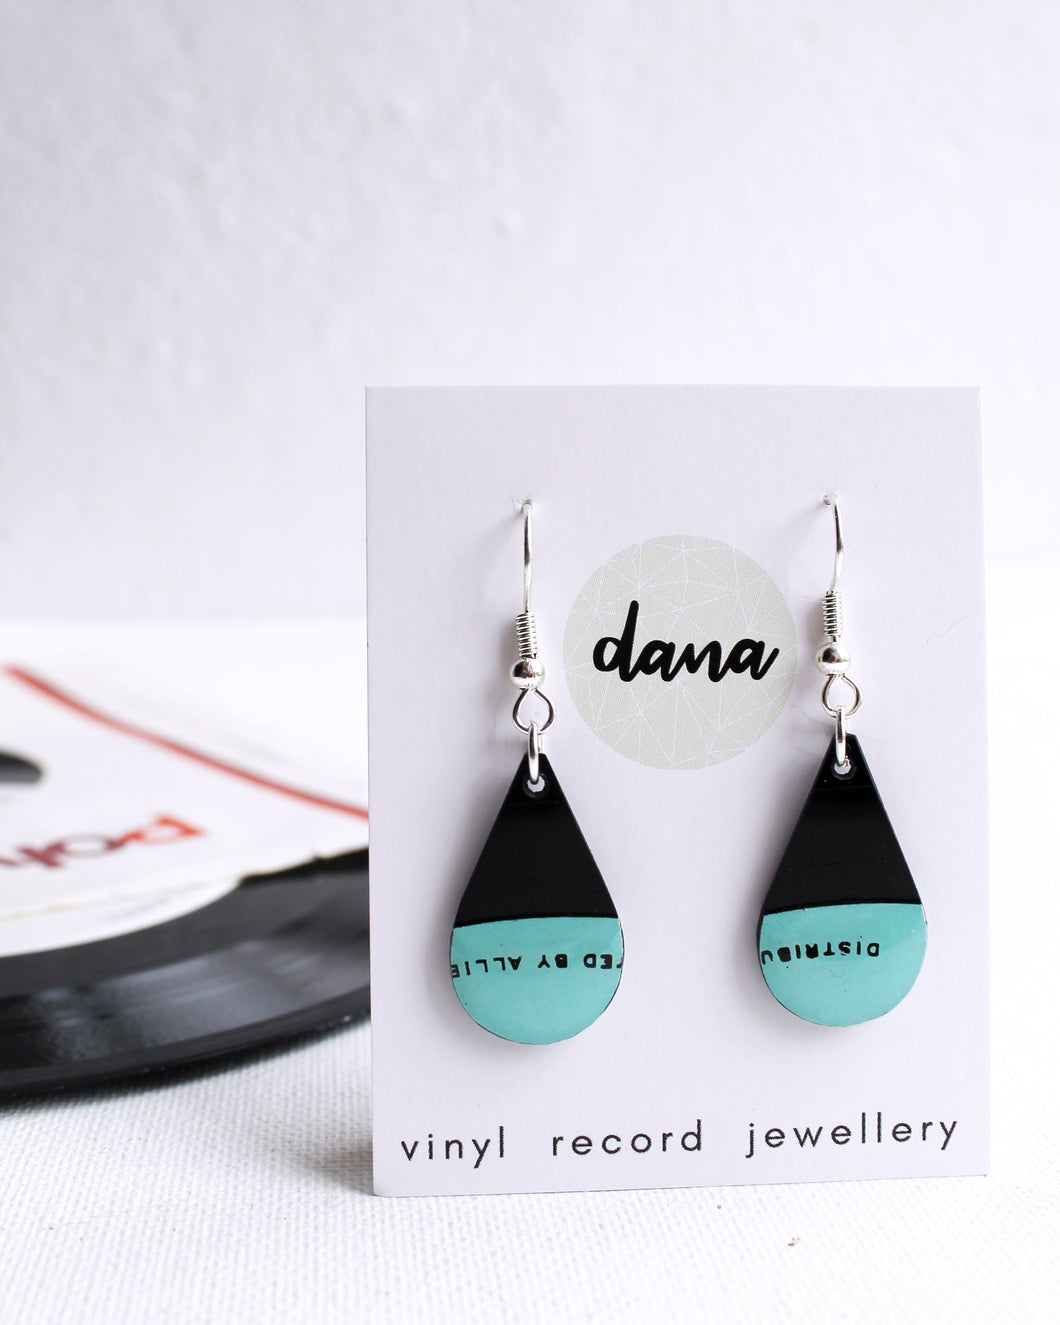 Handcrafted small aqua teardrop vinyl record earrings